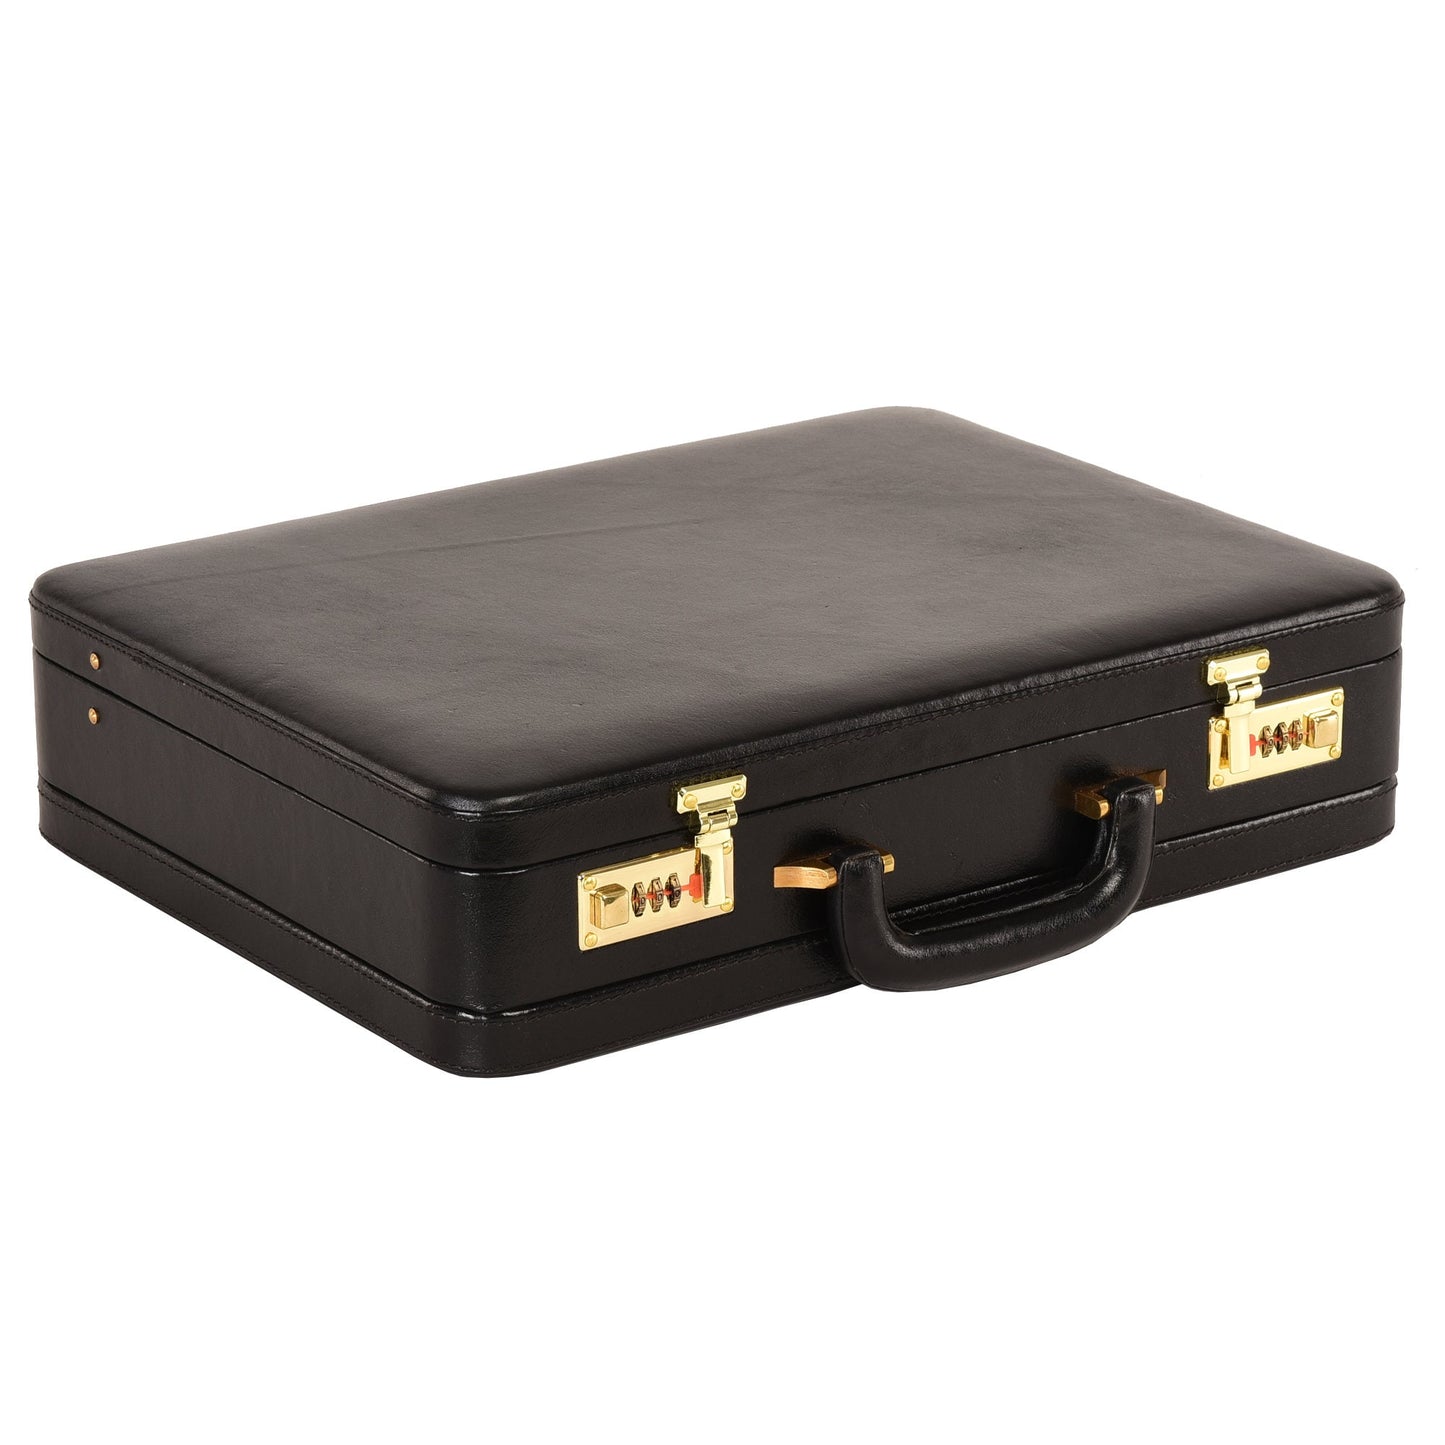 Expandable Leather Briefcase for Mens Leather Attache Handbag for Doctors Business Handbag Black Leather Briefcase Office Briefcase